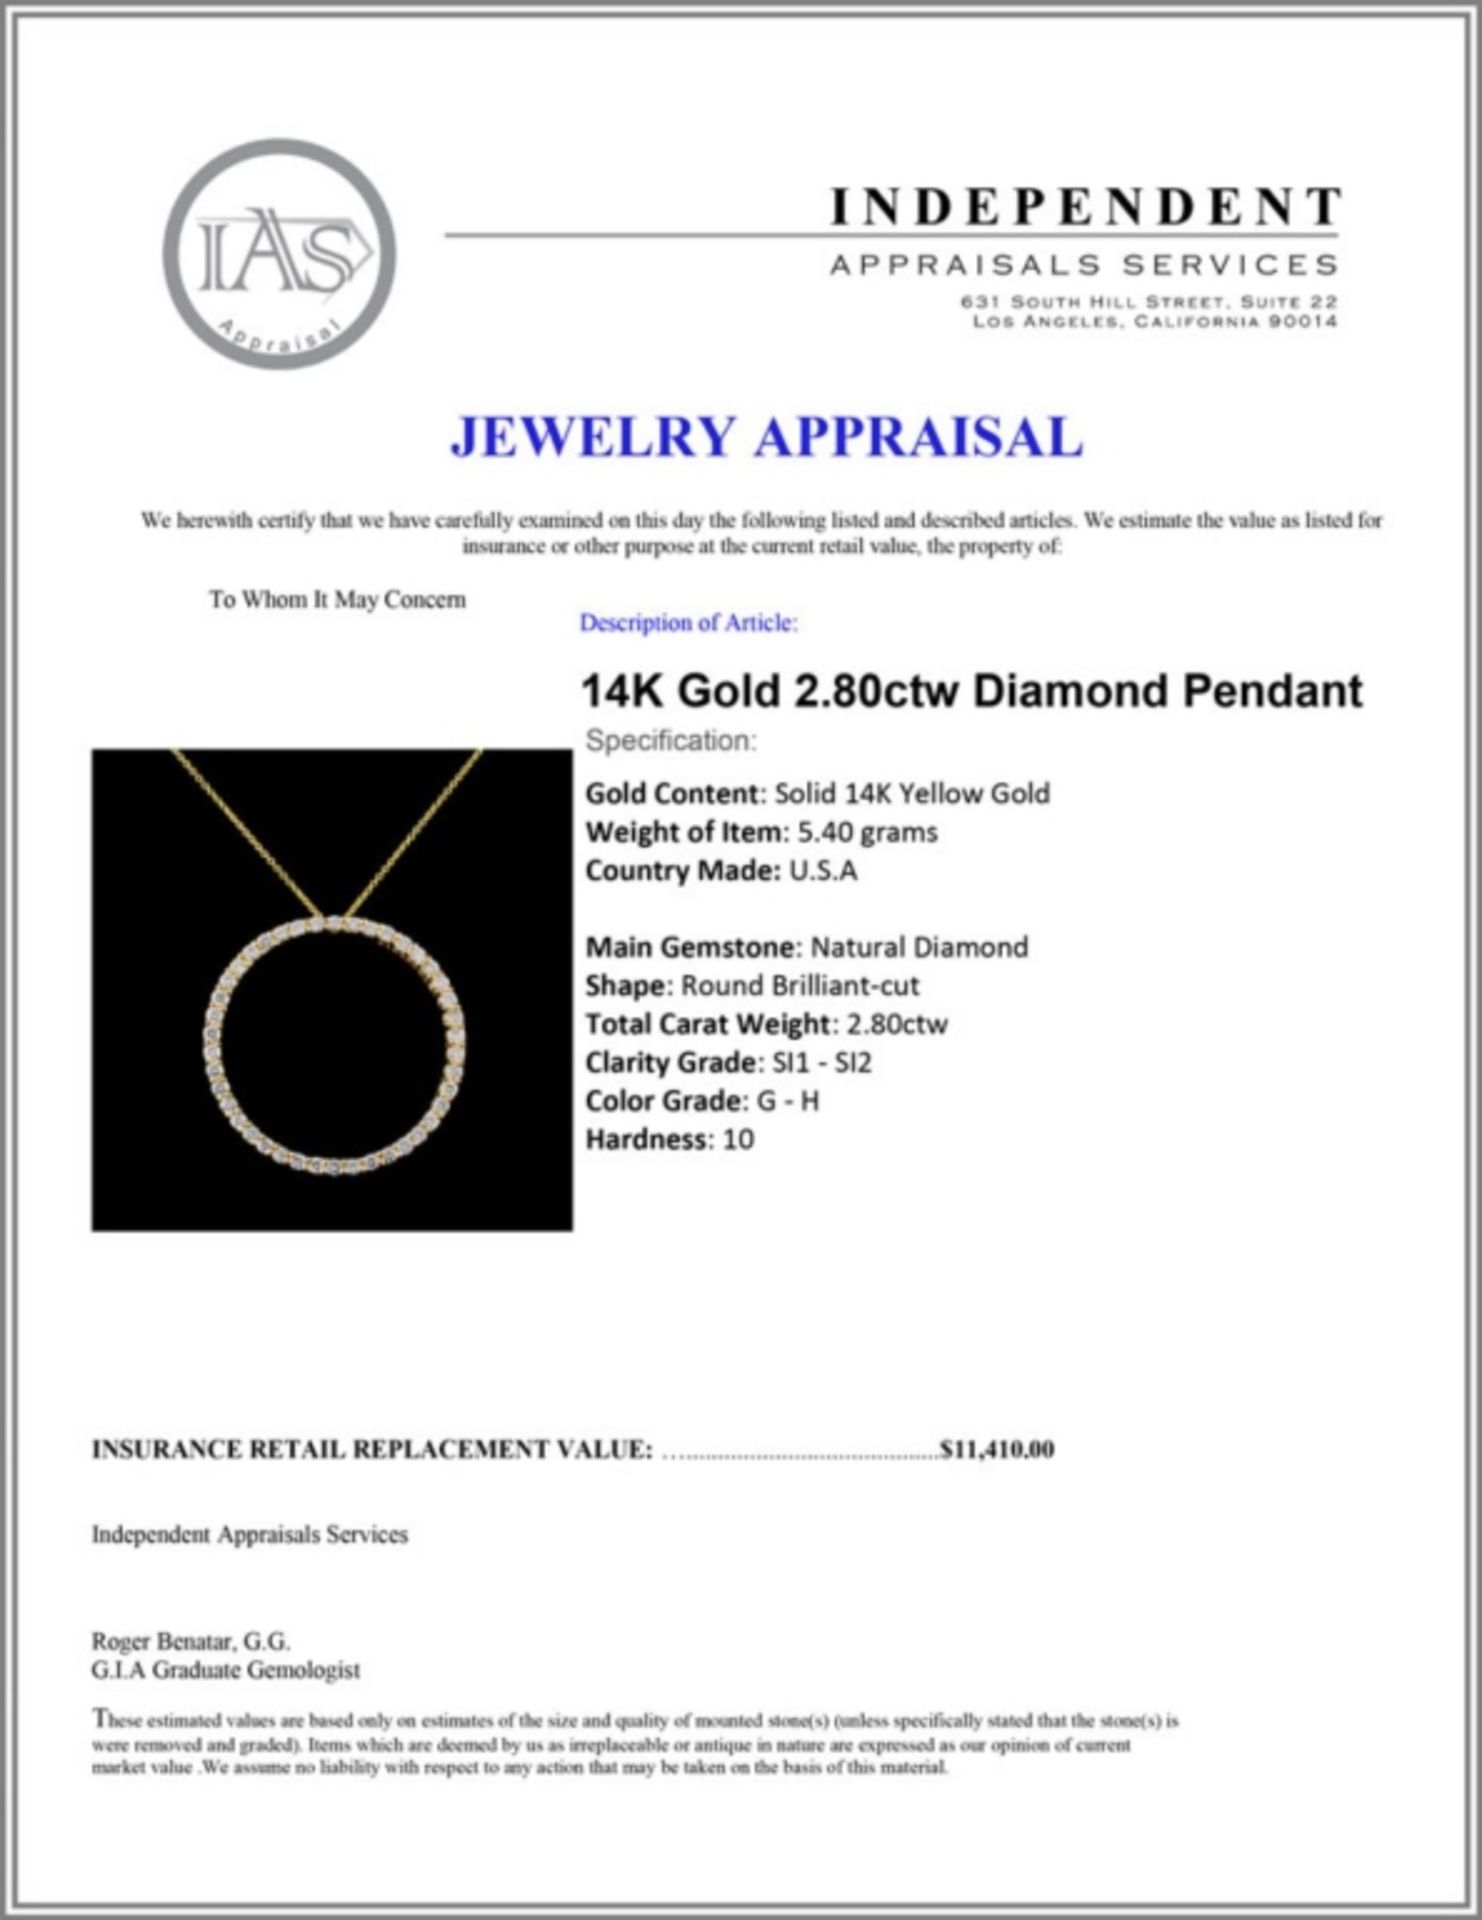 14K Gold 2.80ctw Diamond Pendant - Image 4 of 4